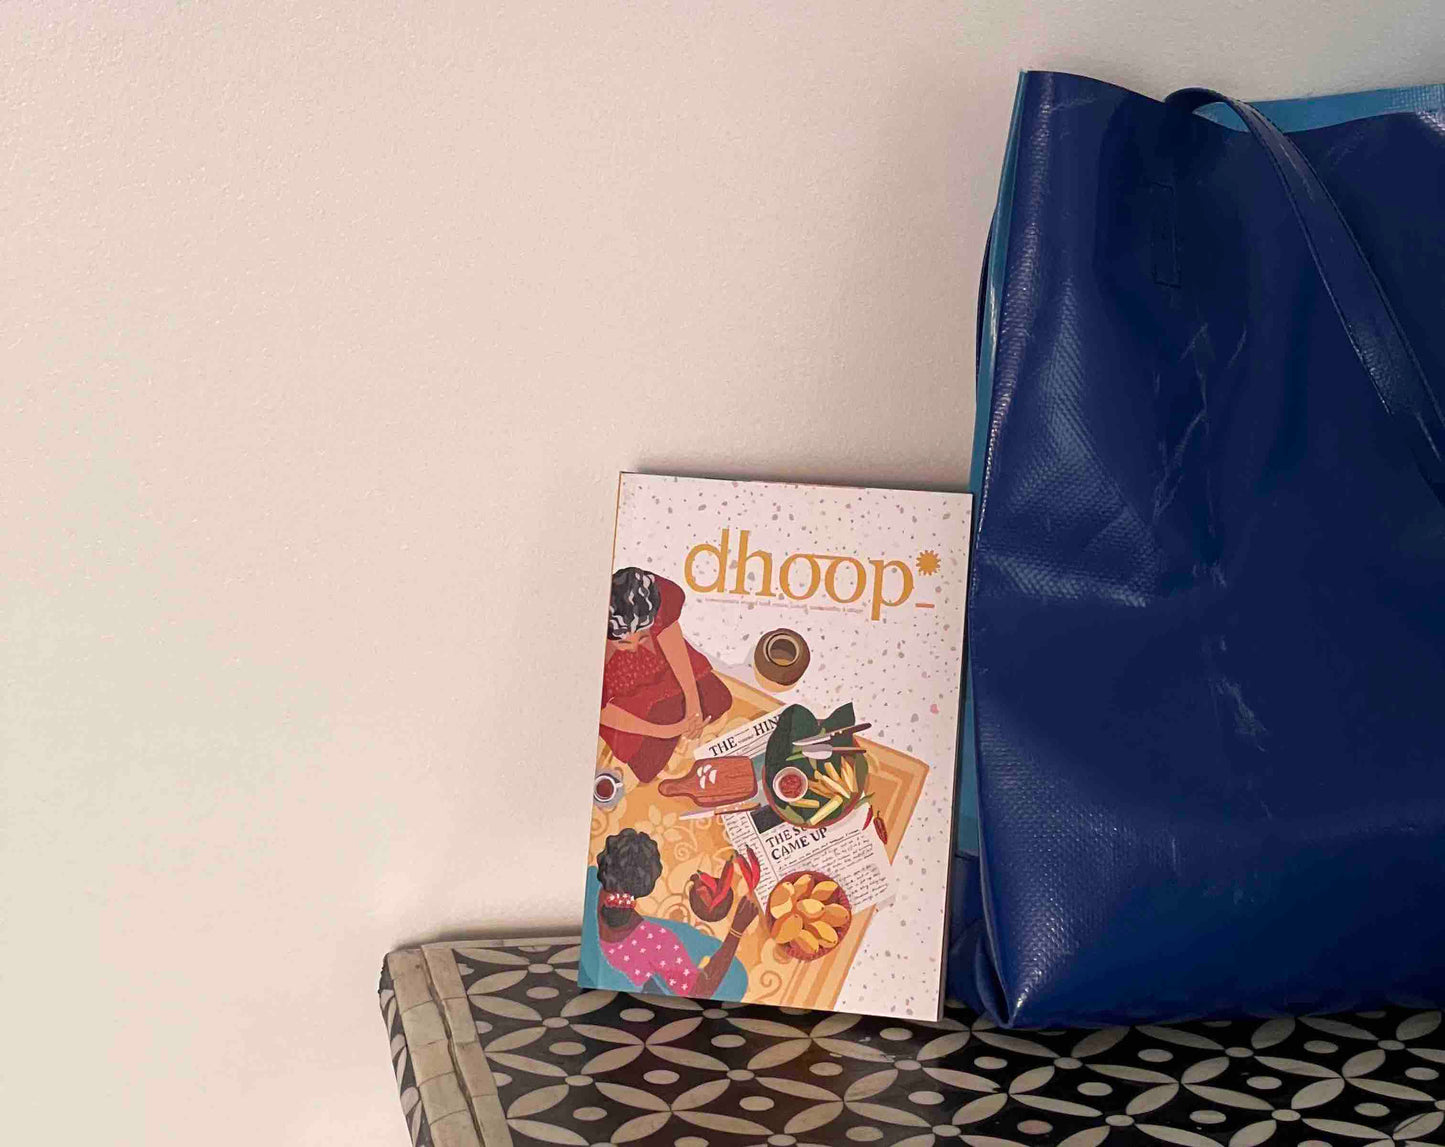 dhoop Magazine lying upright against a big blue bag